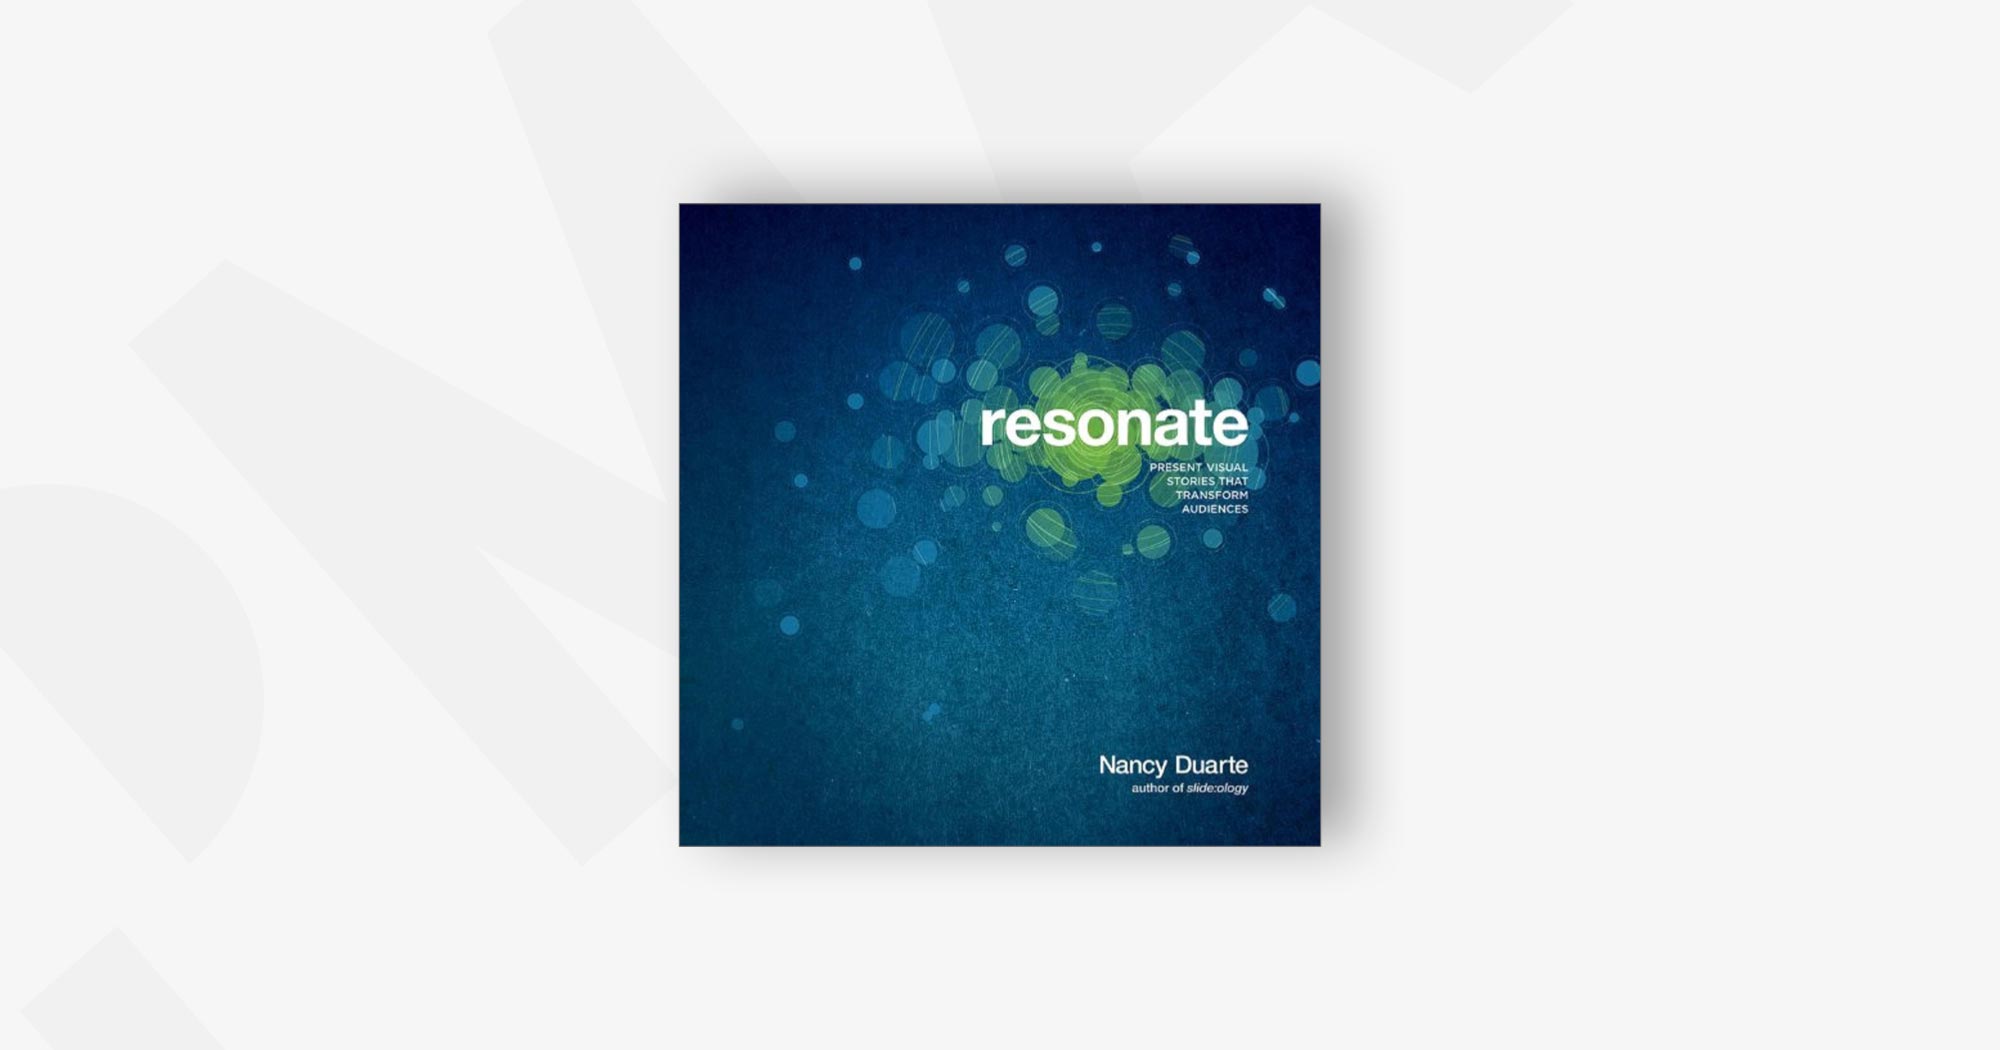 Resonate: Present Visual Stories that Transform Audiences – Nancy Duarte